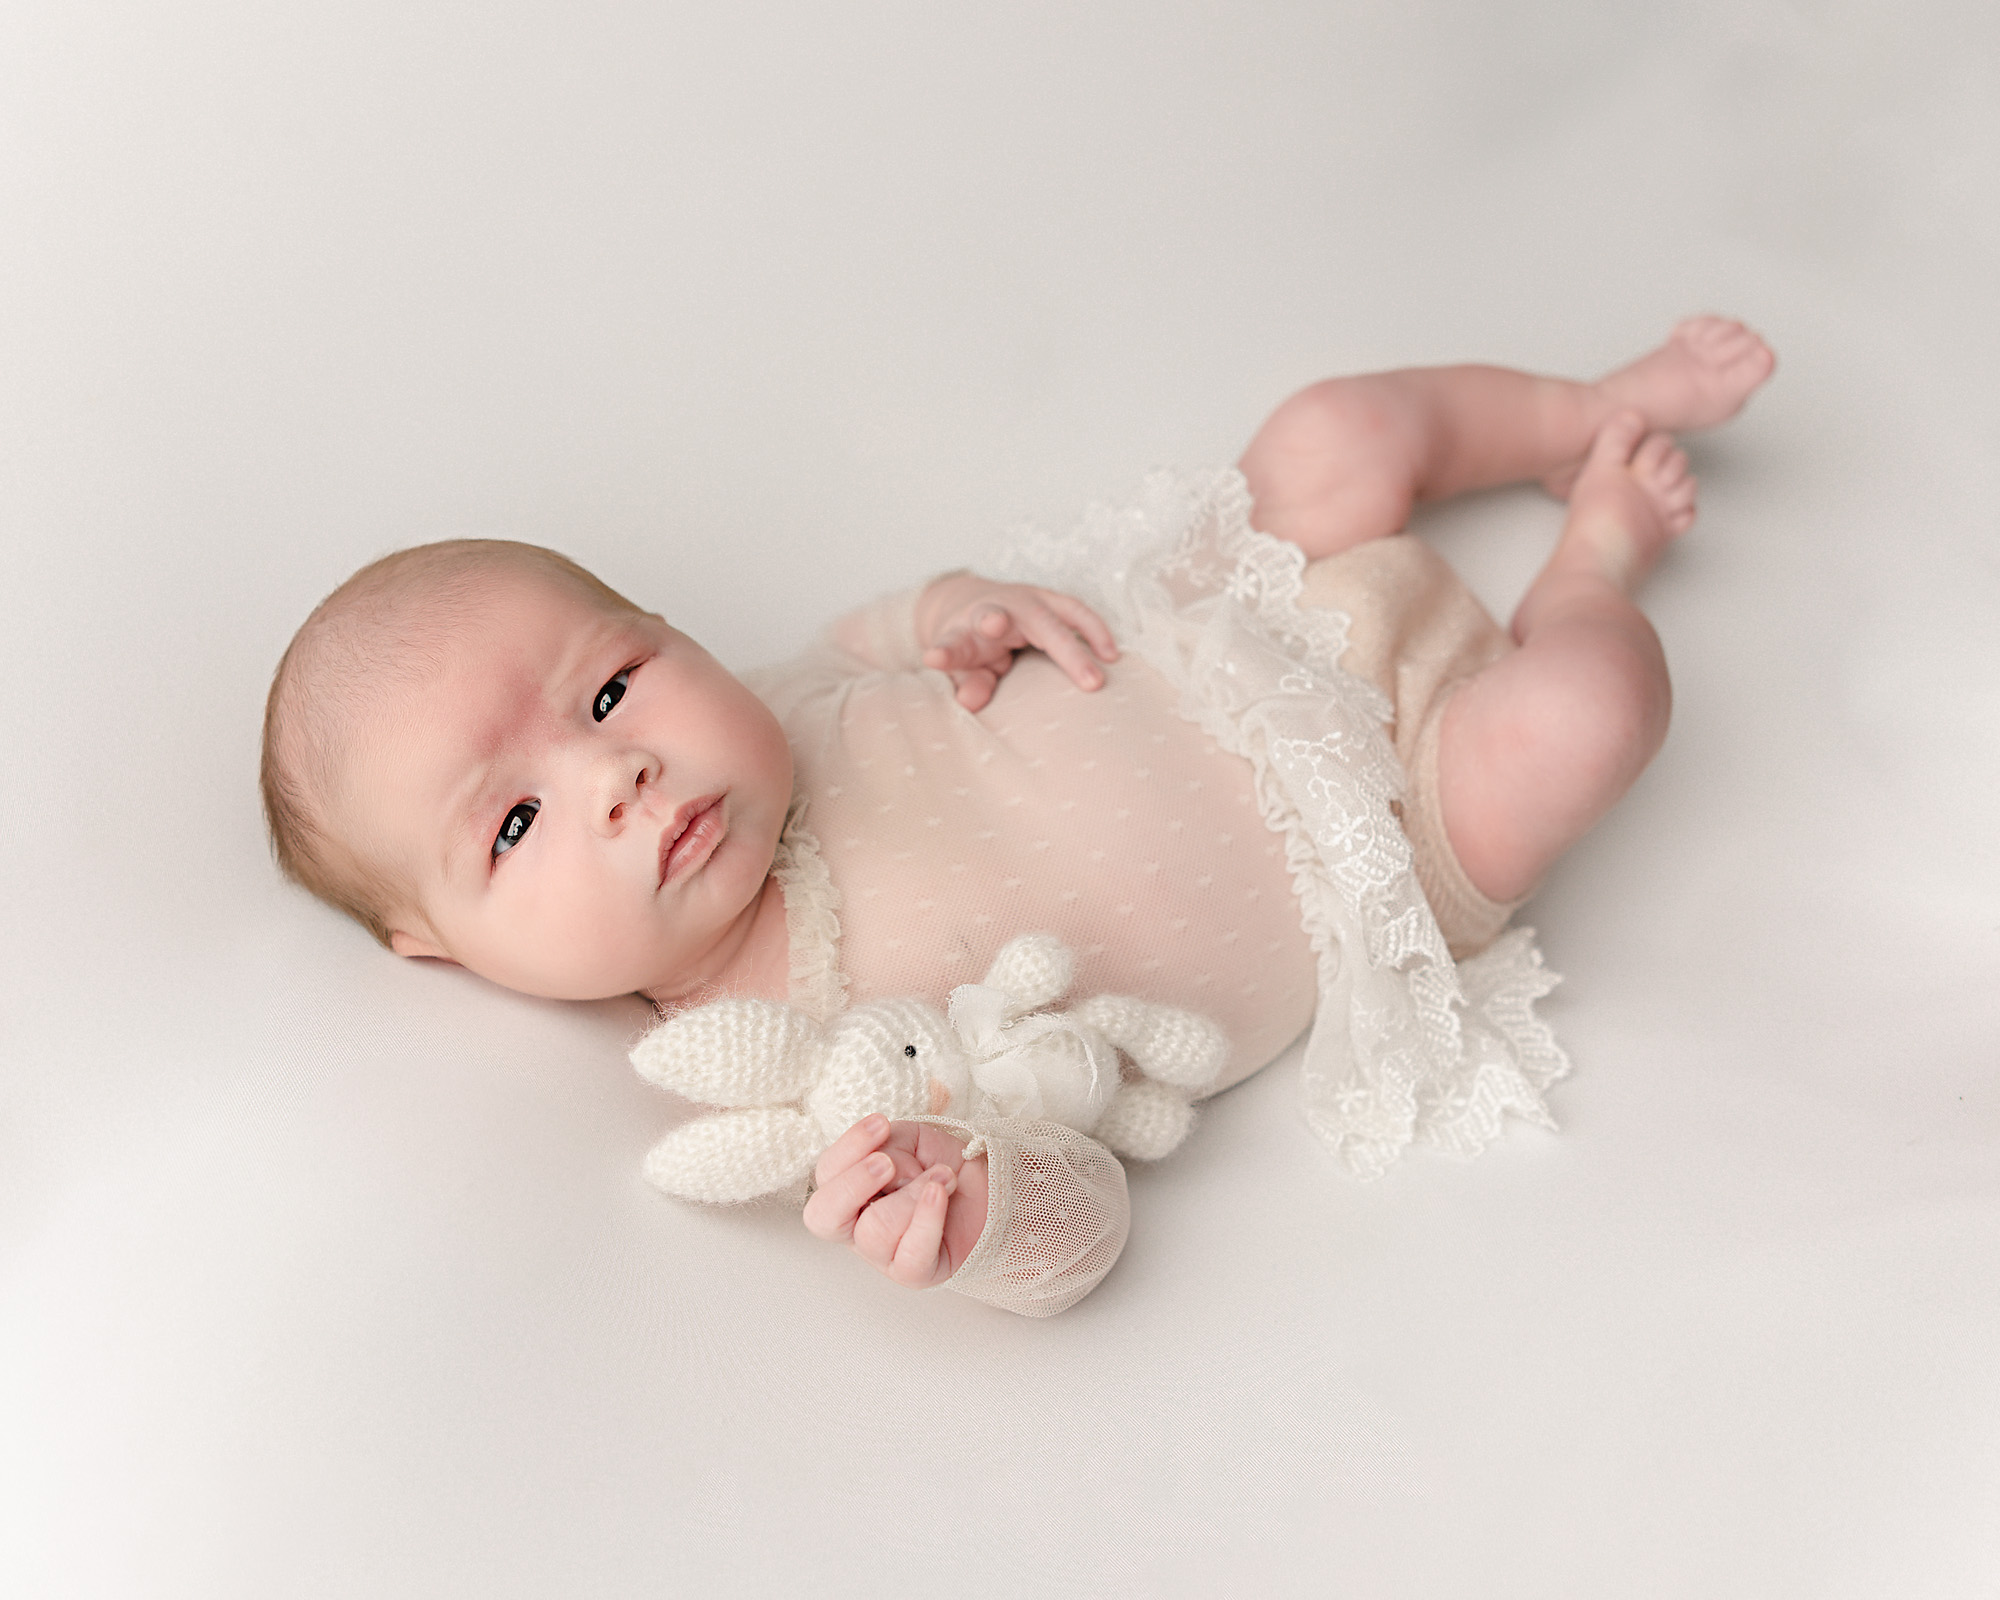 newborn baby in sheer white dress holding a bunny stuffed animal Balanced Family Natural Medicine